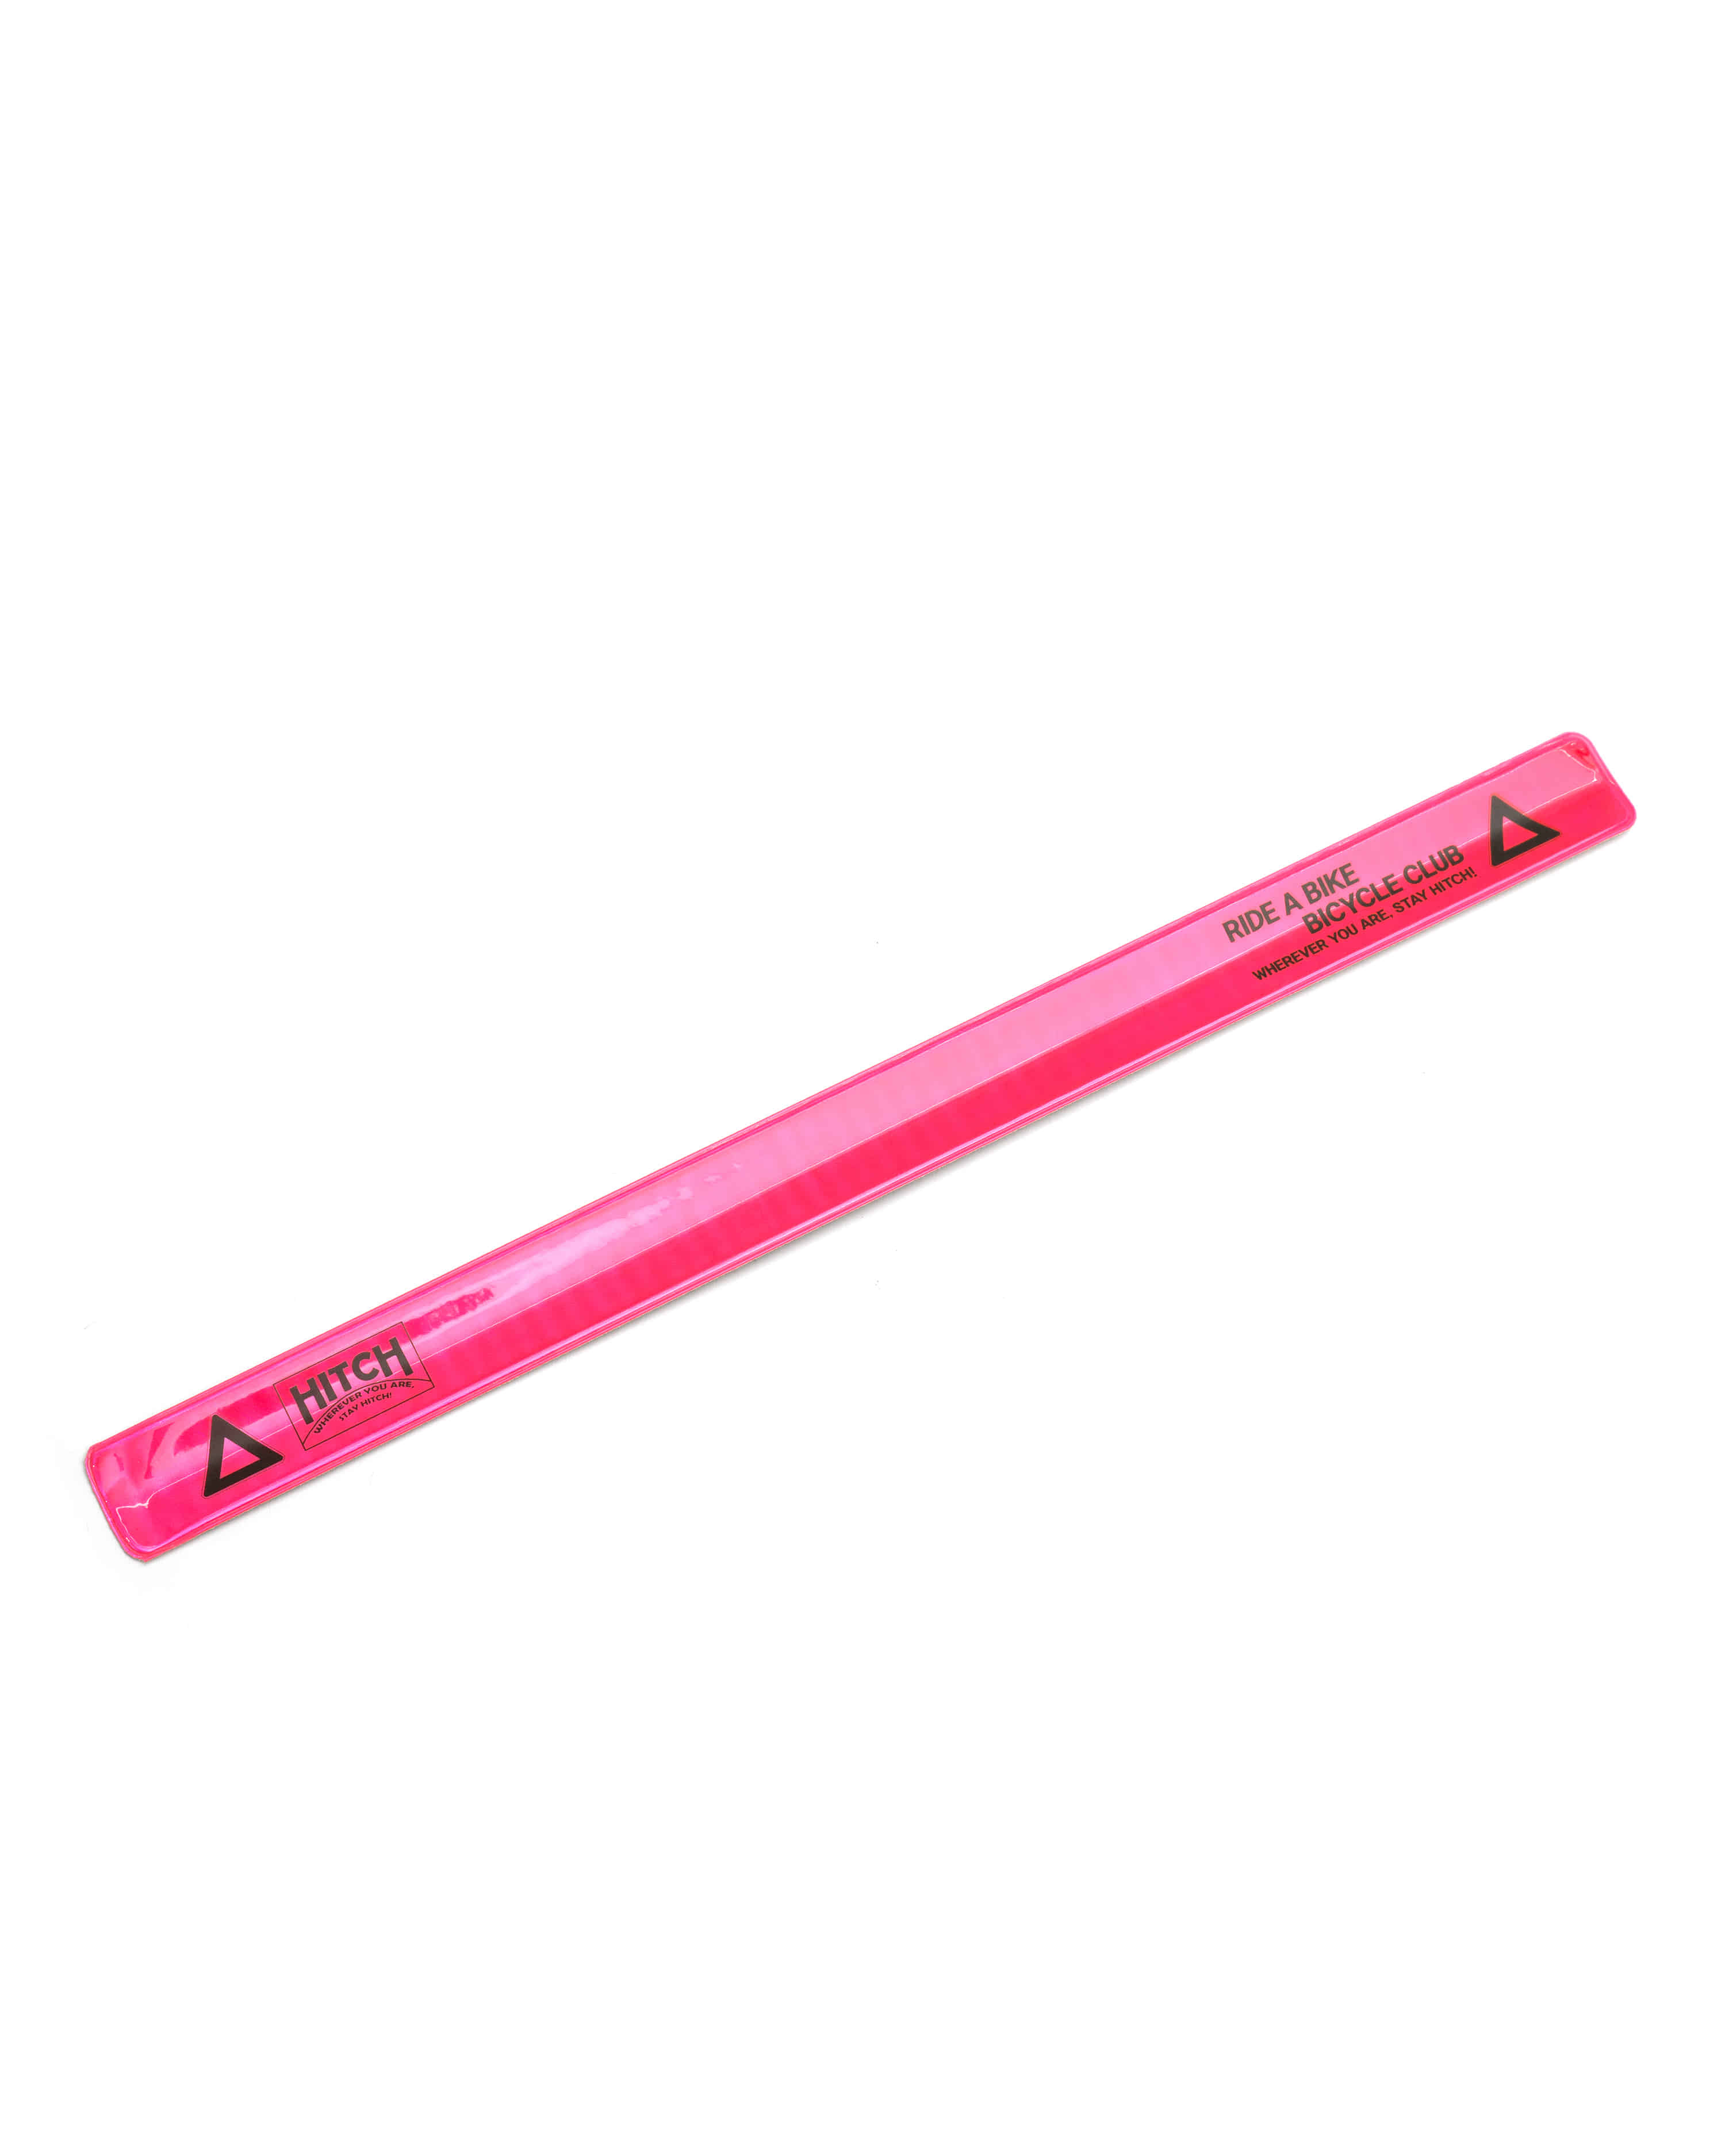 Reflector slapband (Long) - pink